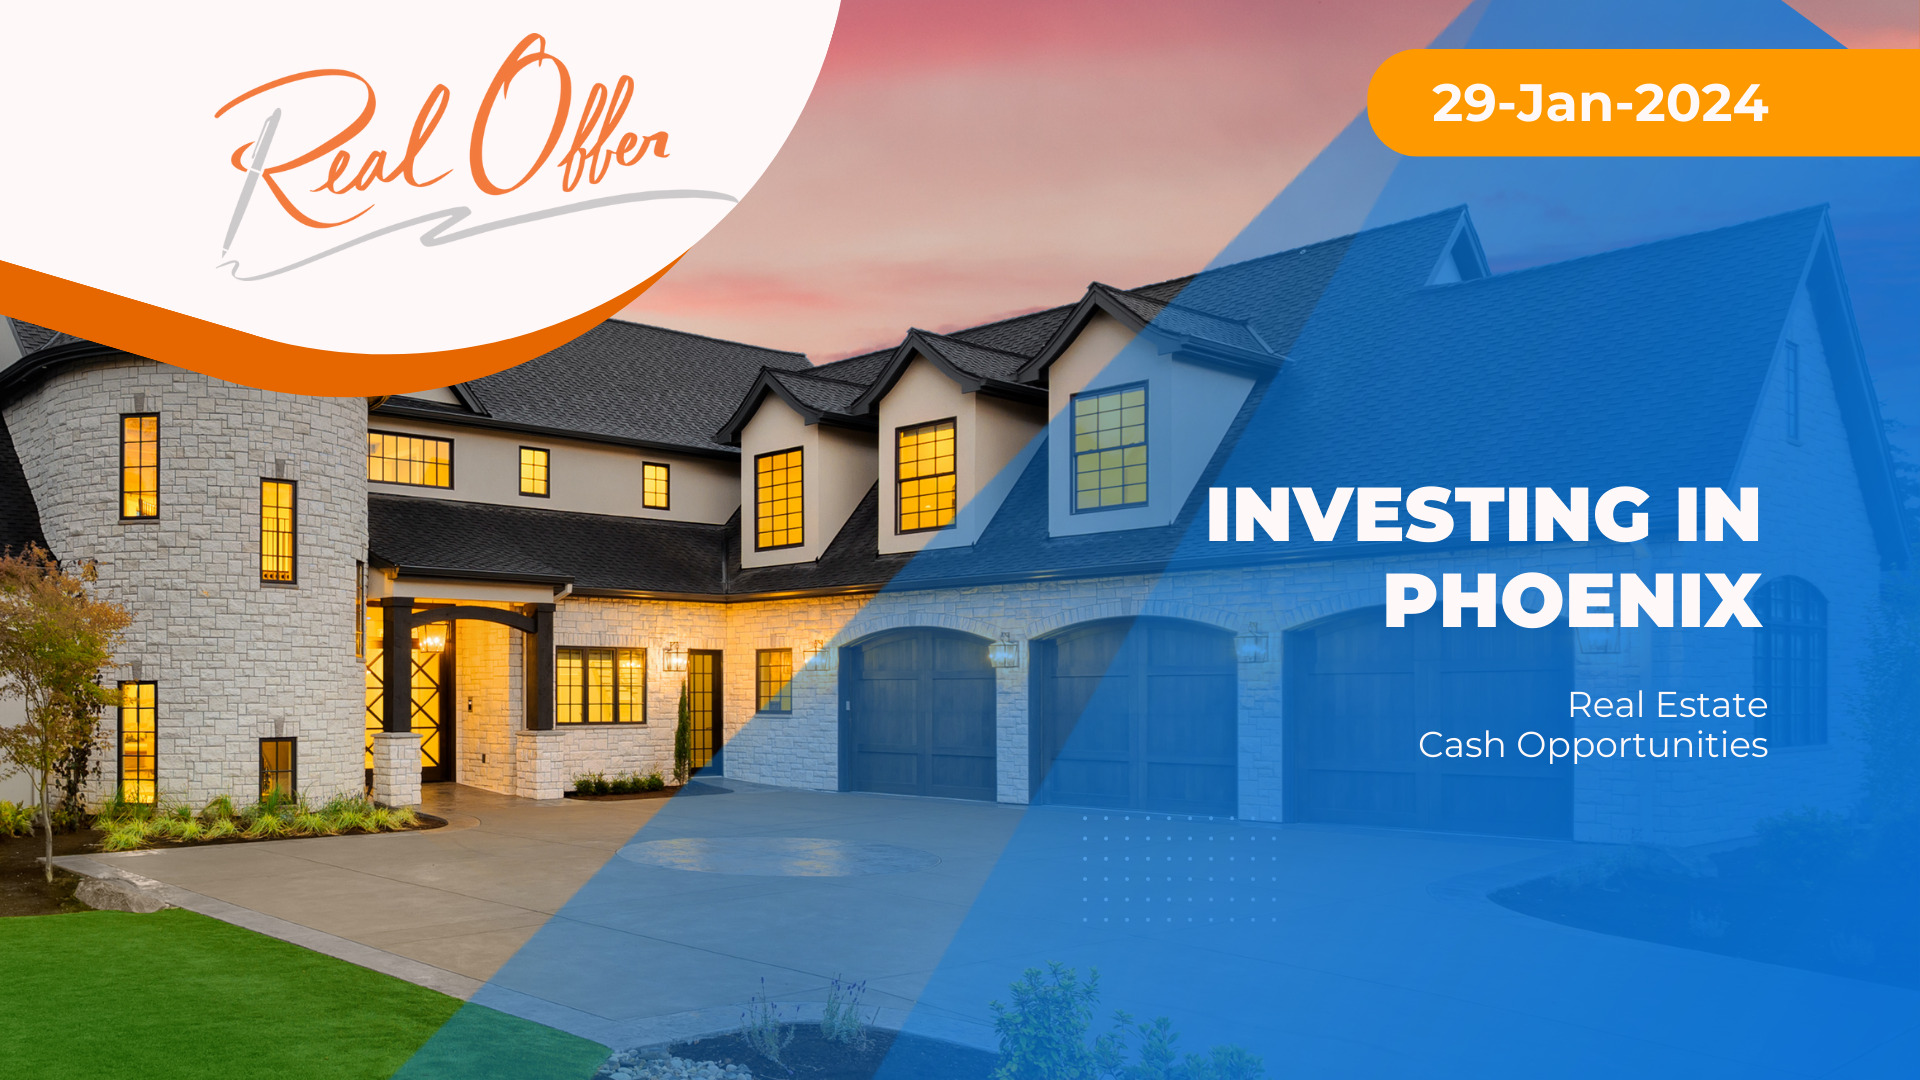 Phoenix Real Estate: Prime Investments Await!